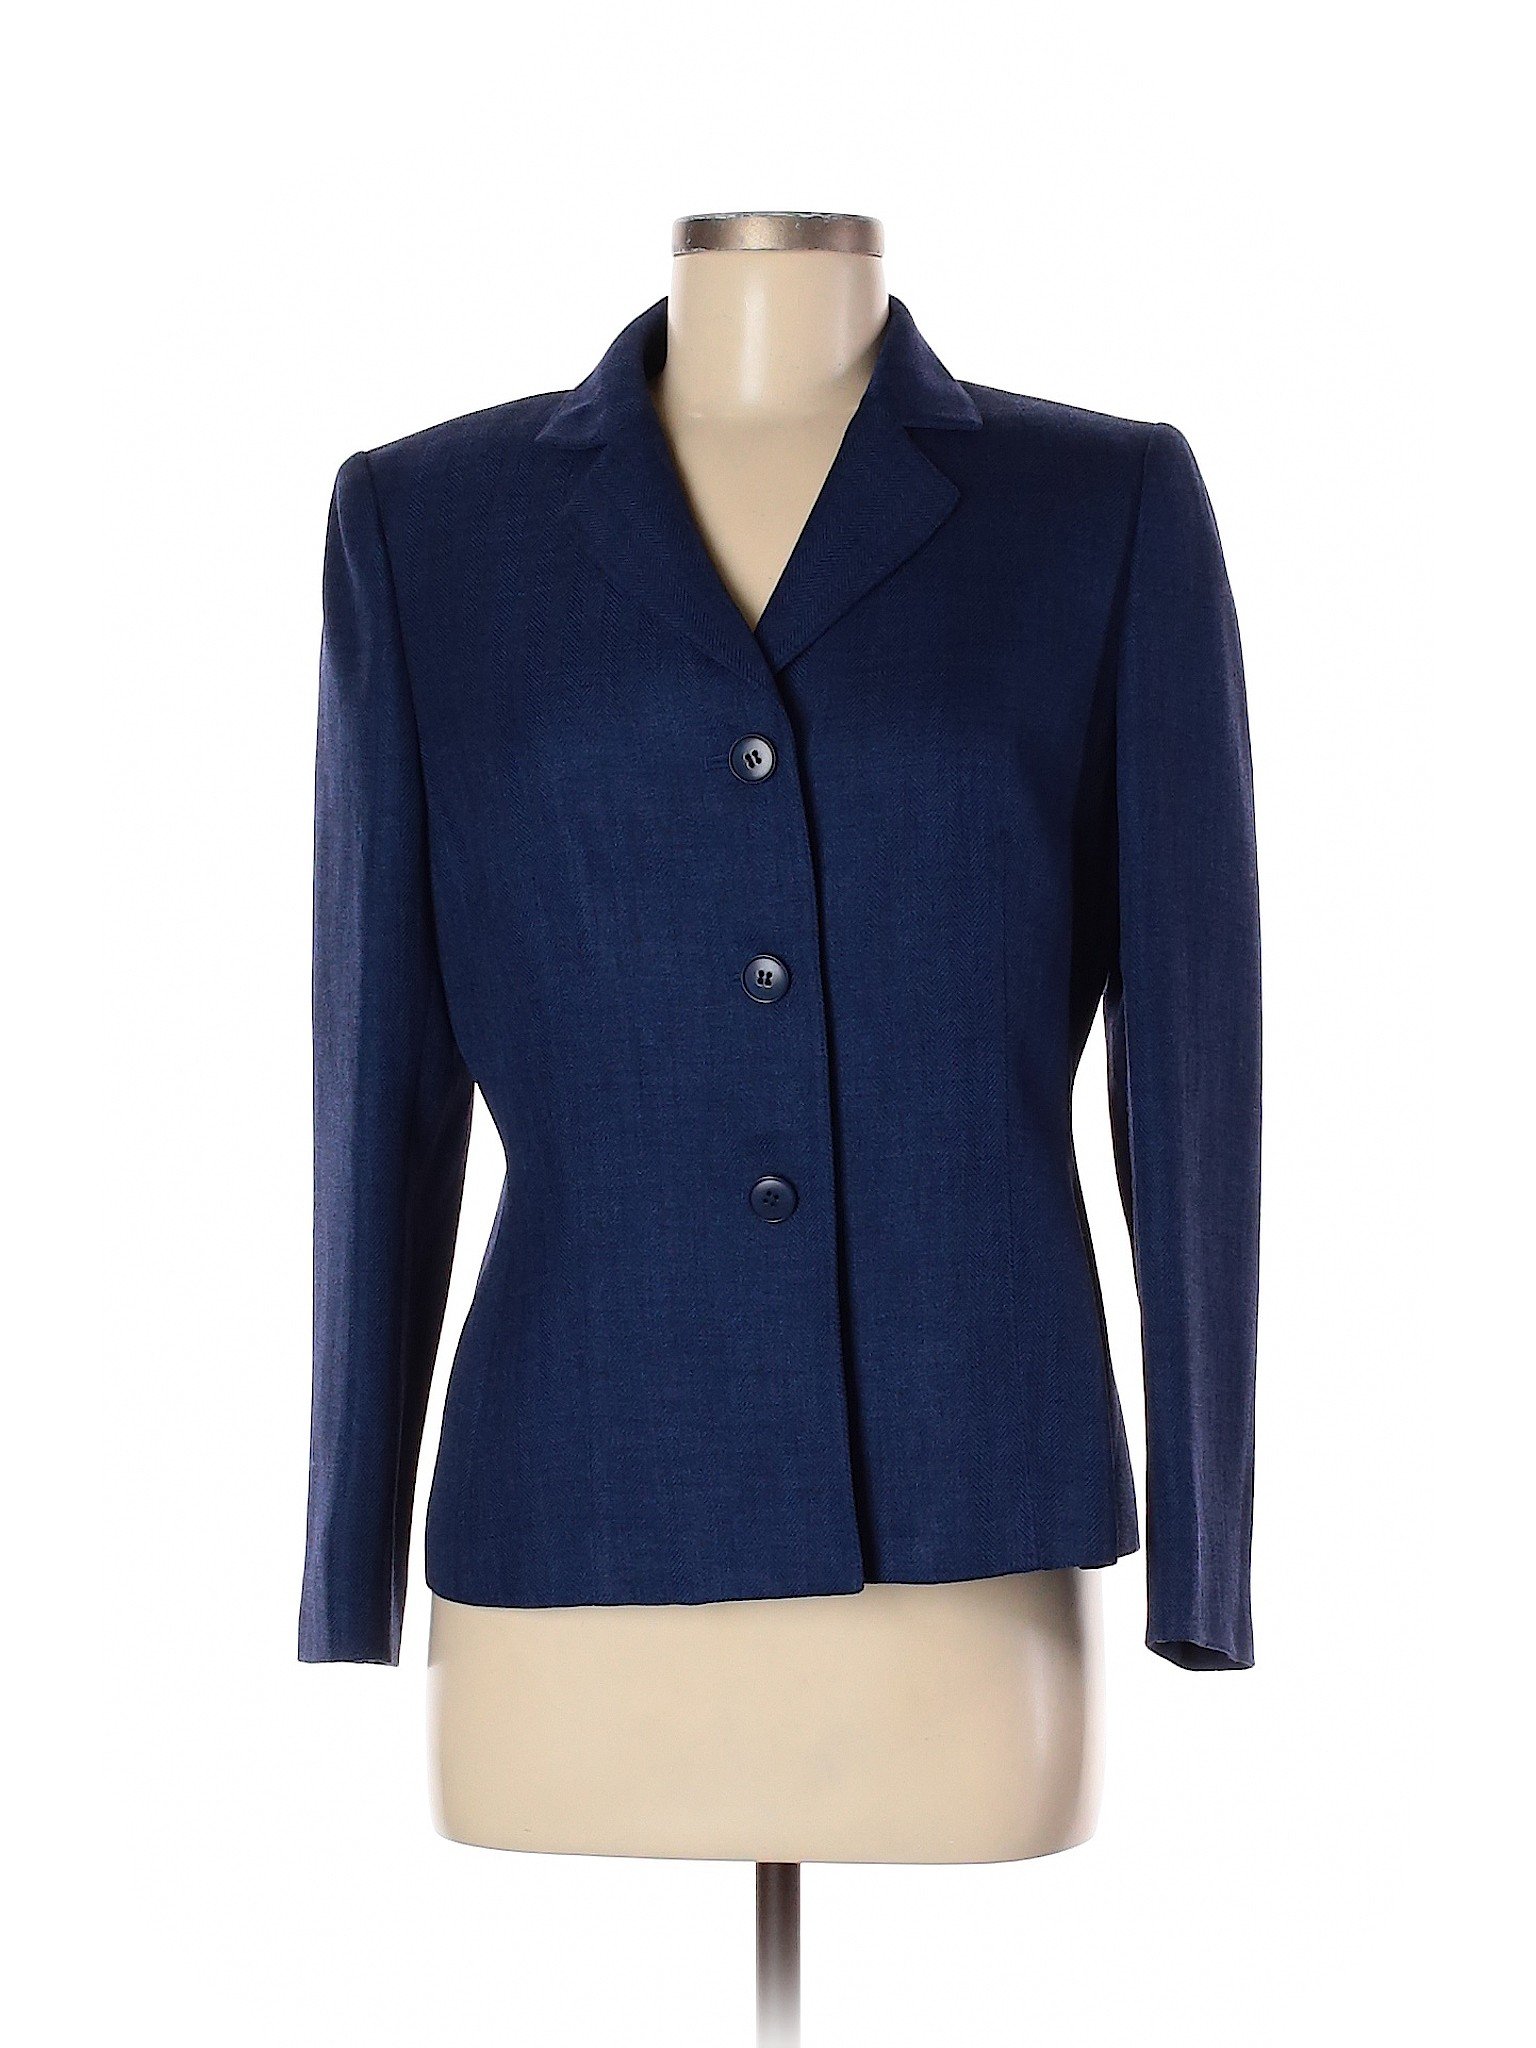 Suit Studio Women Blue Blazer 8 Petites | eBay